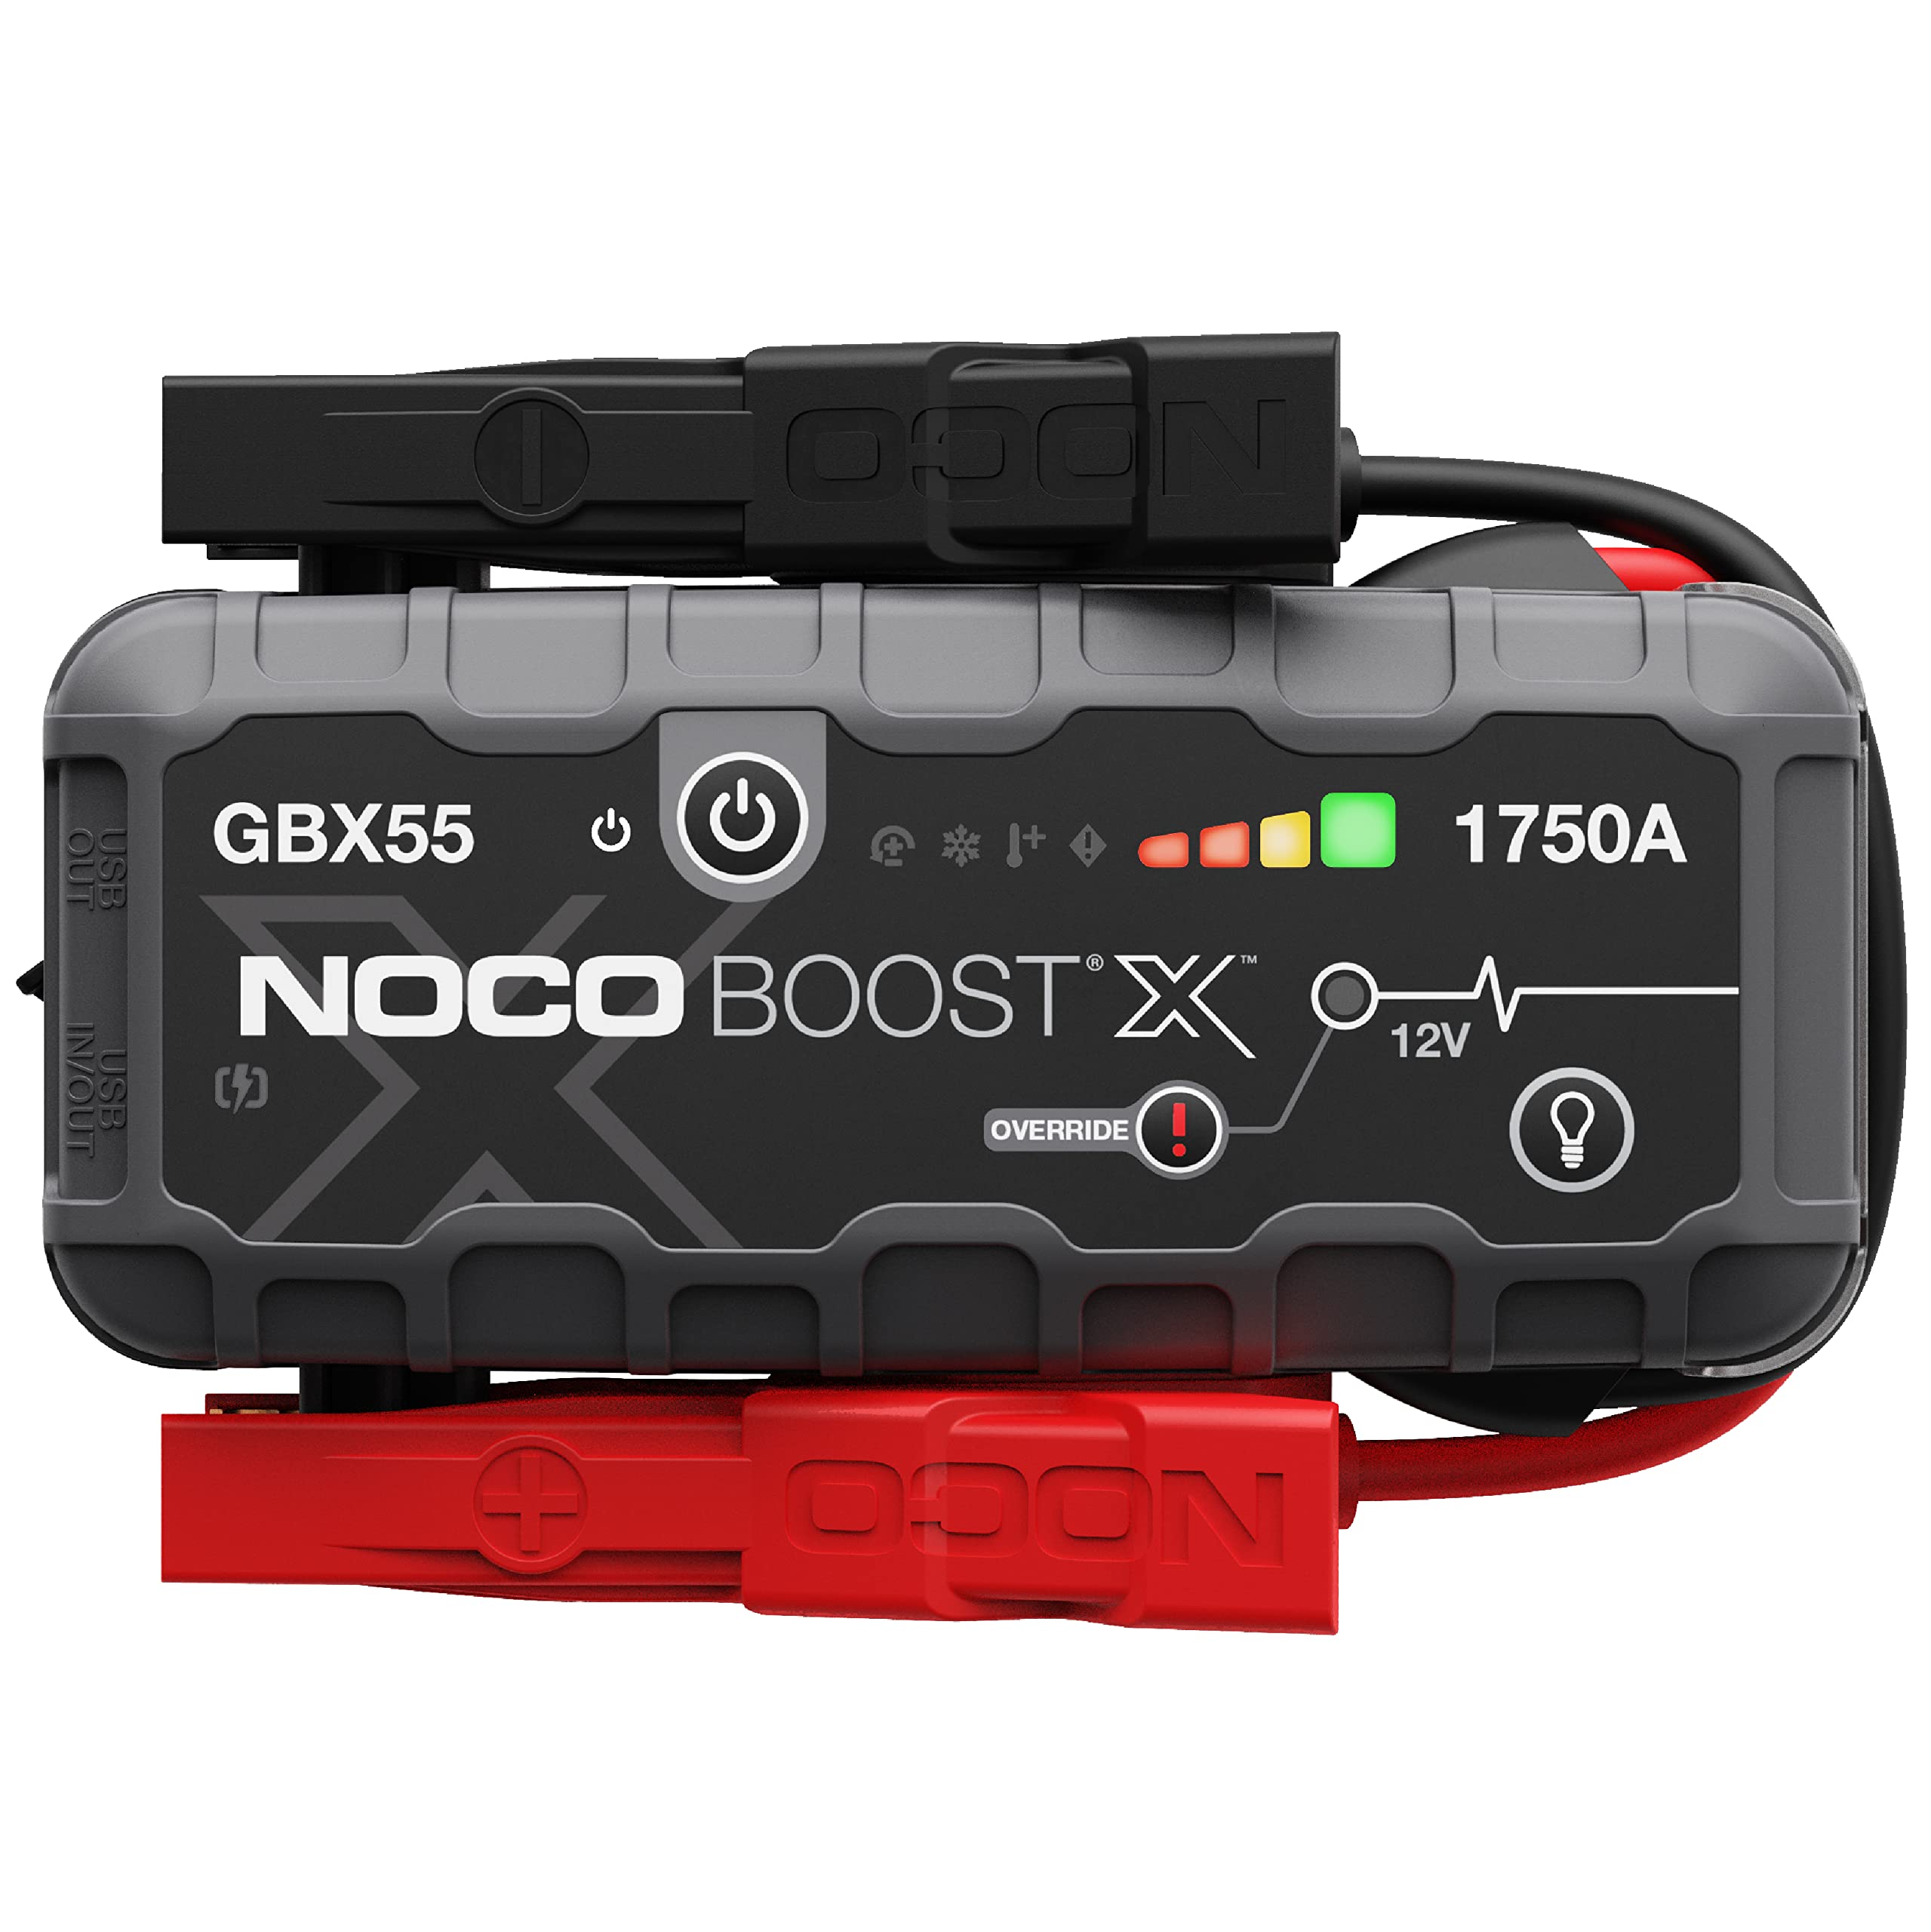 NOCO Boost X GBX55 1750A 12V UltraSafe Portable Lithium...